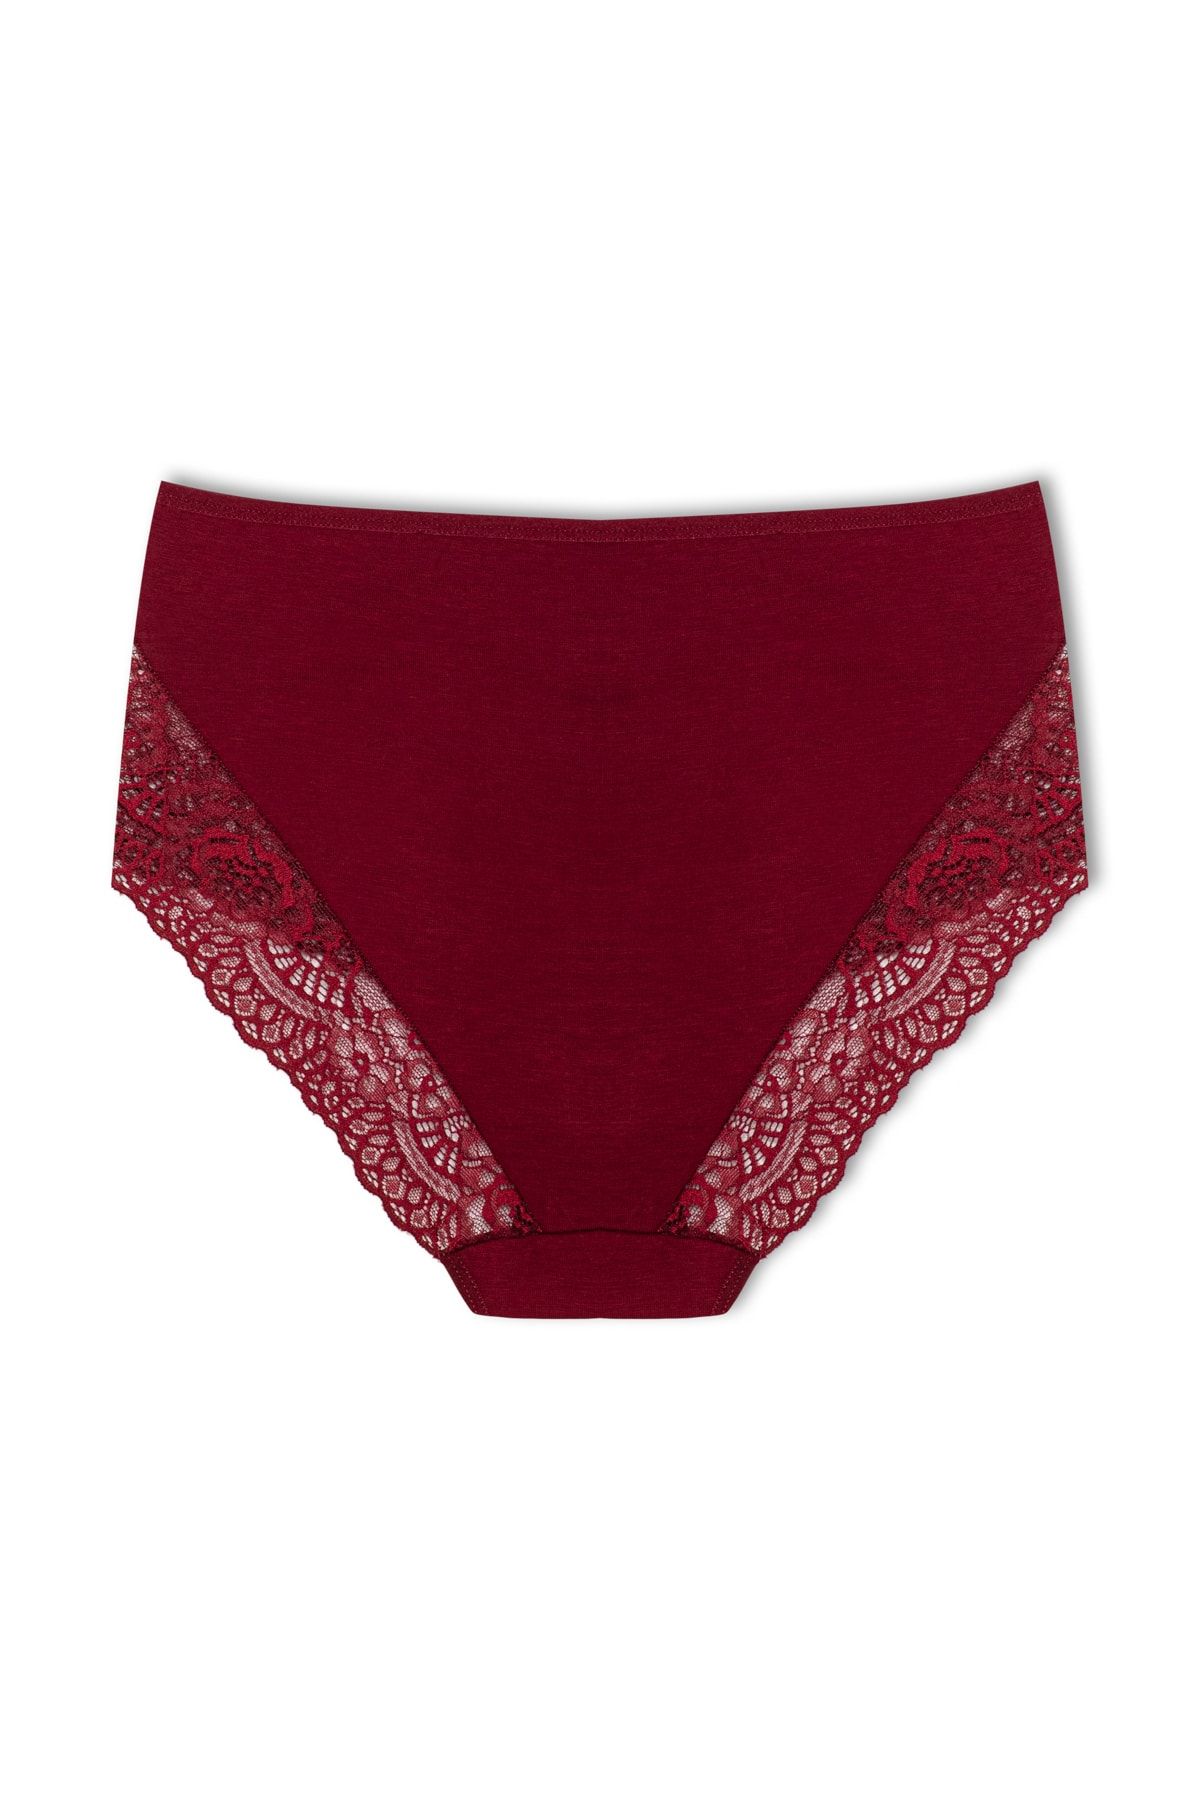 Humaone 100% Cotton 5 Pack High Waist Women's Panties Bt2-b3 - Trendyol